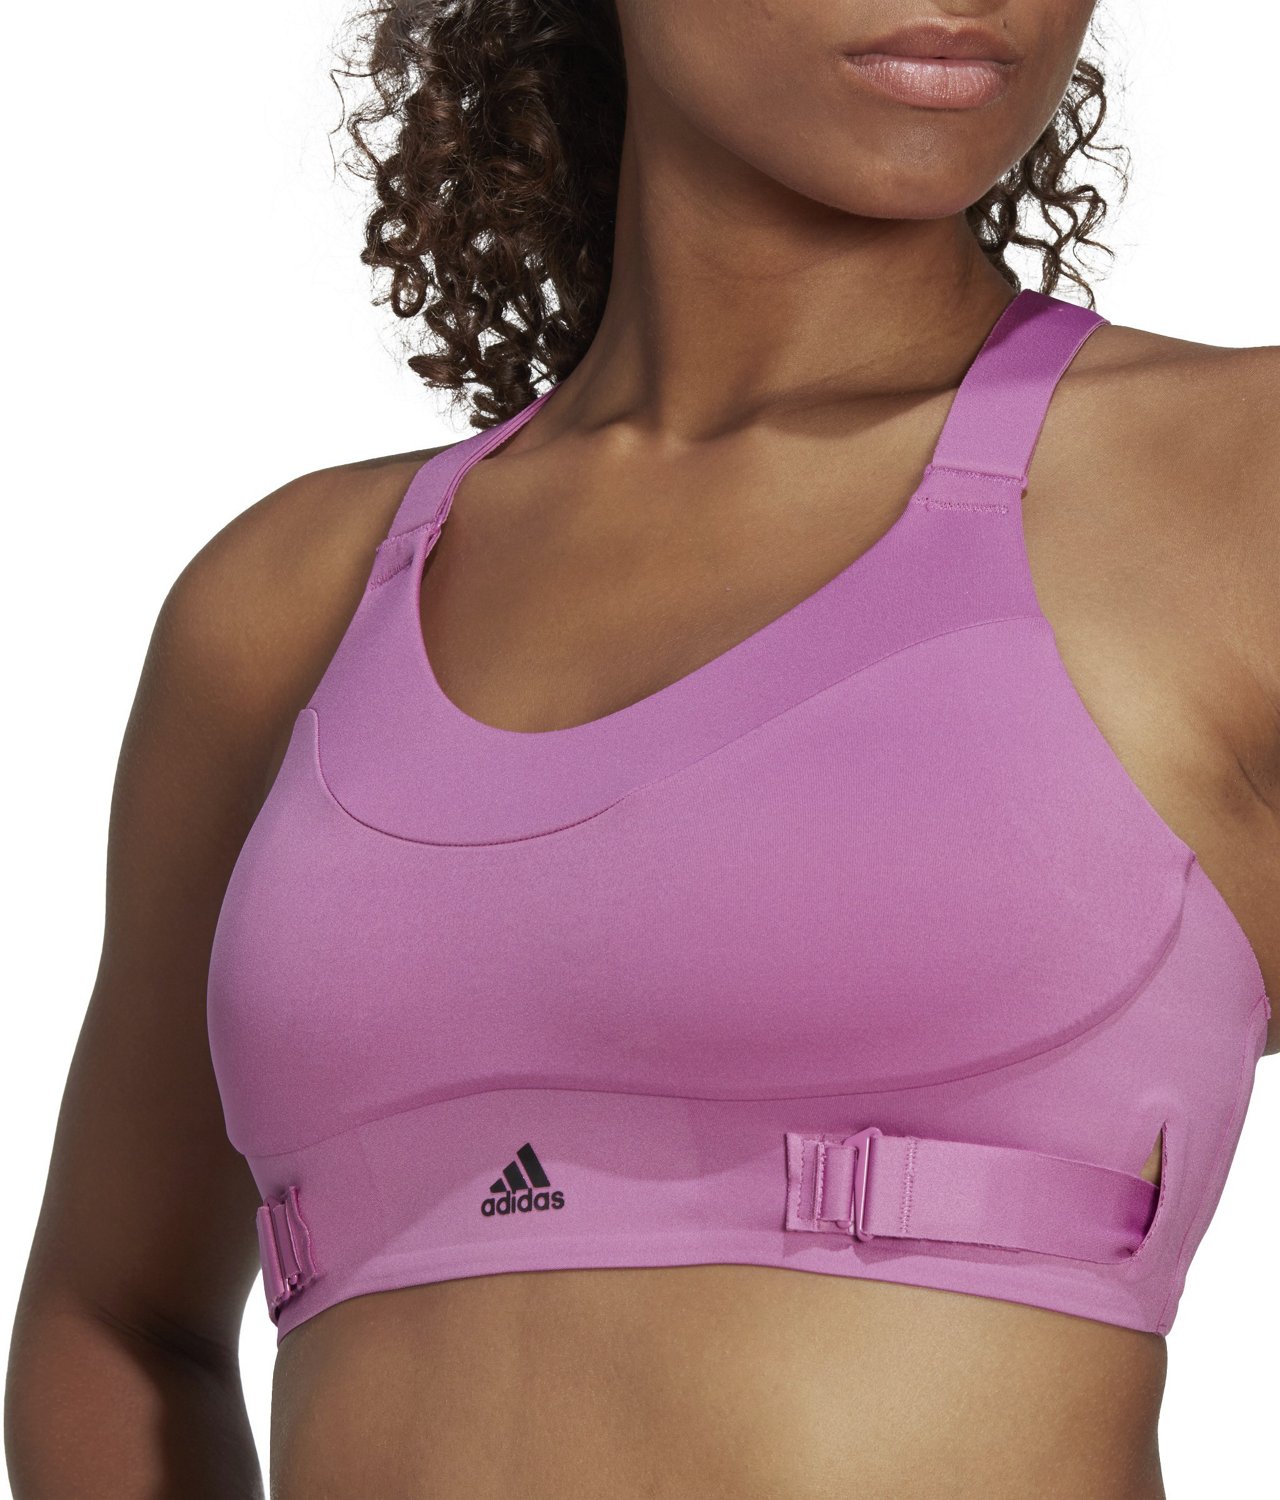 High support bra for women adidas FastImpact Luxe (GT) - Running  accessories - Running - Physical maintenance